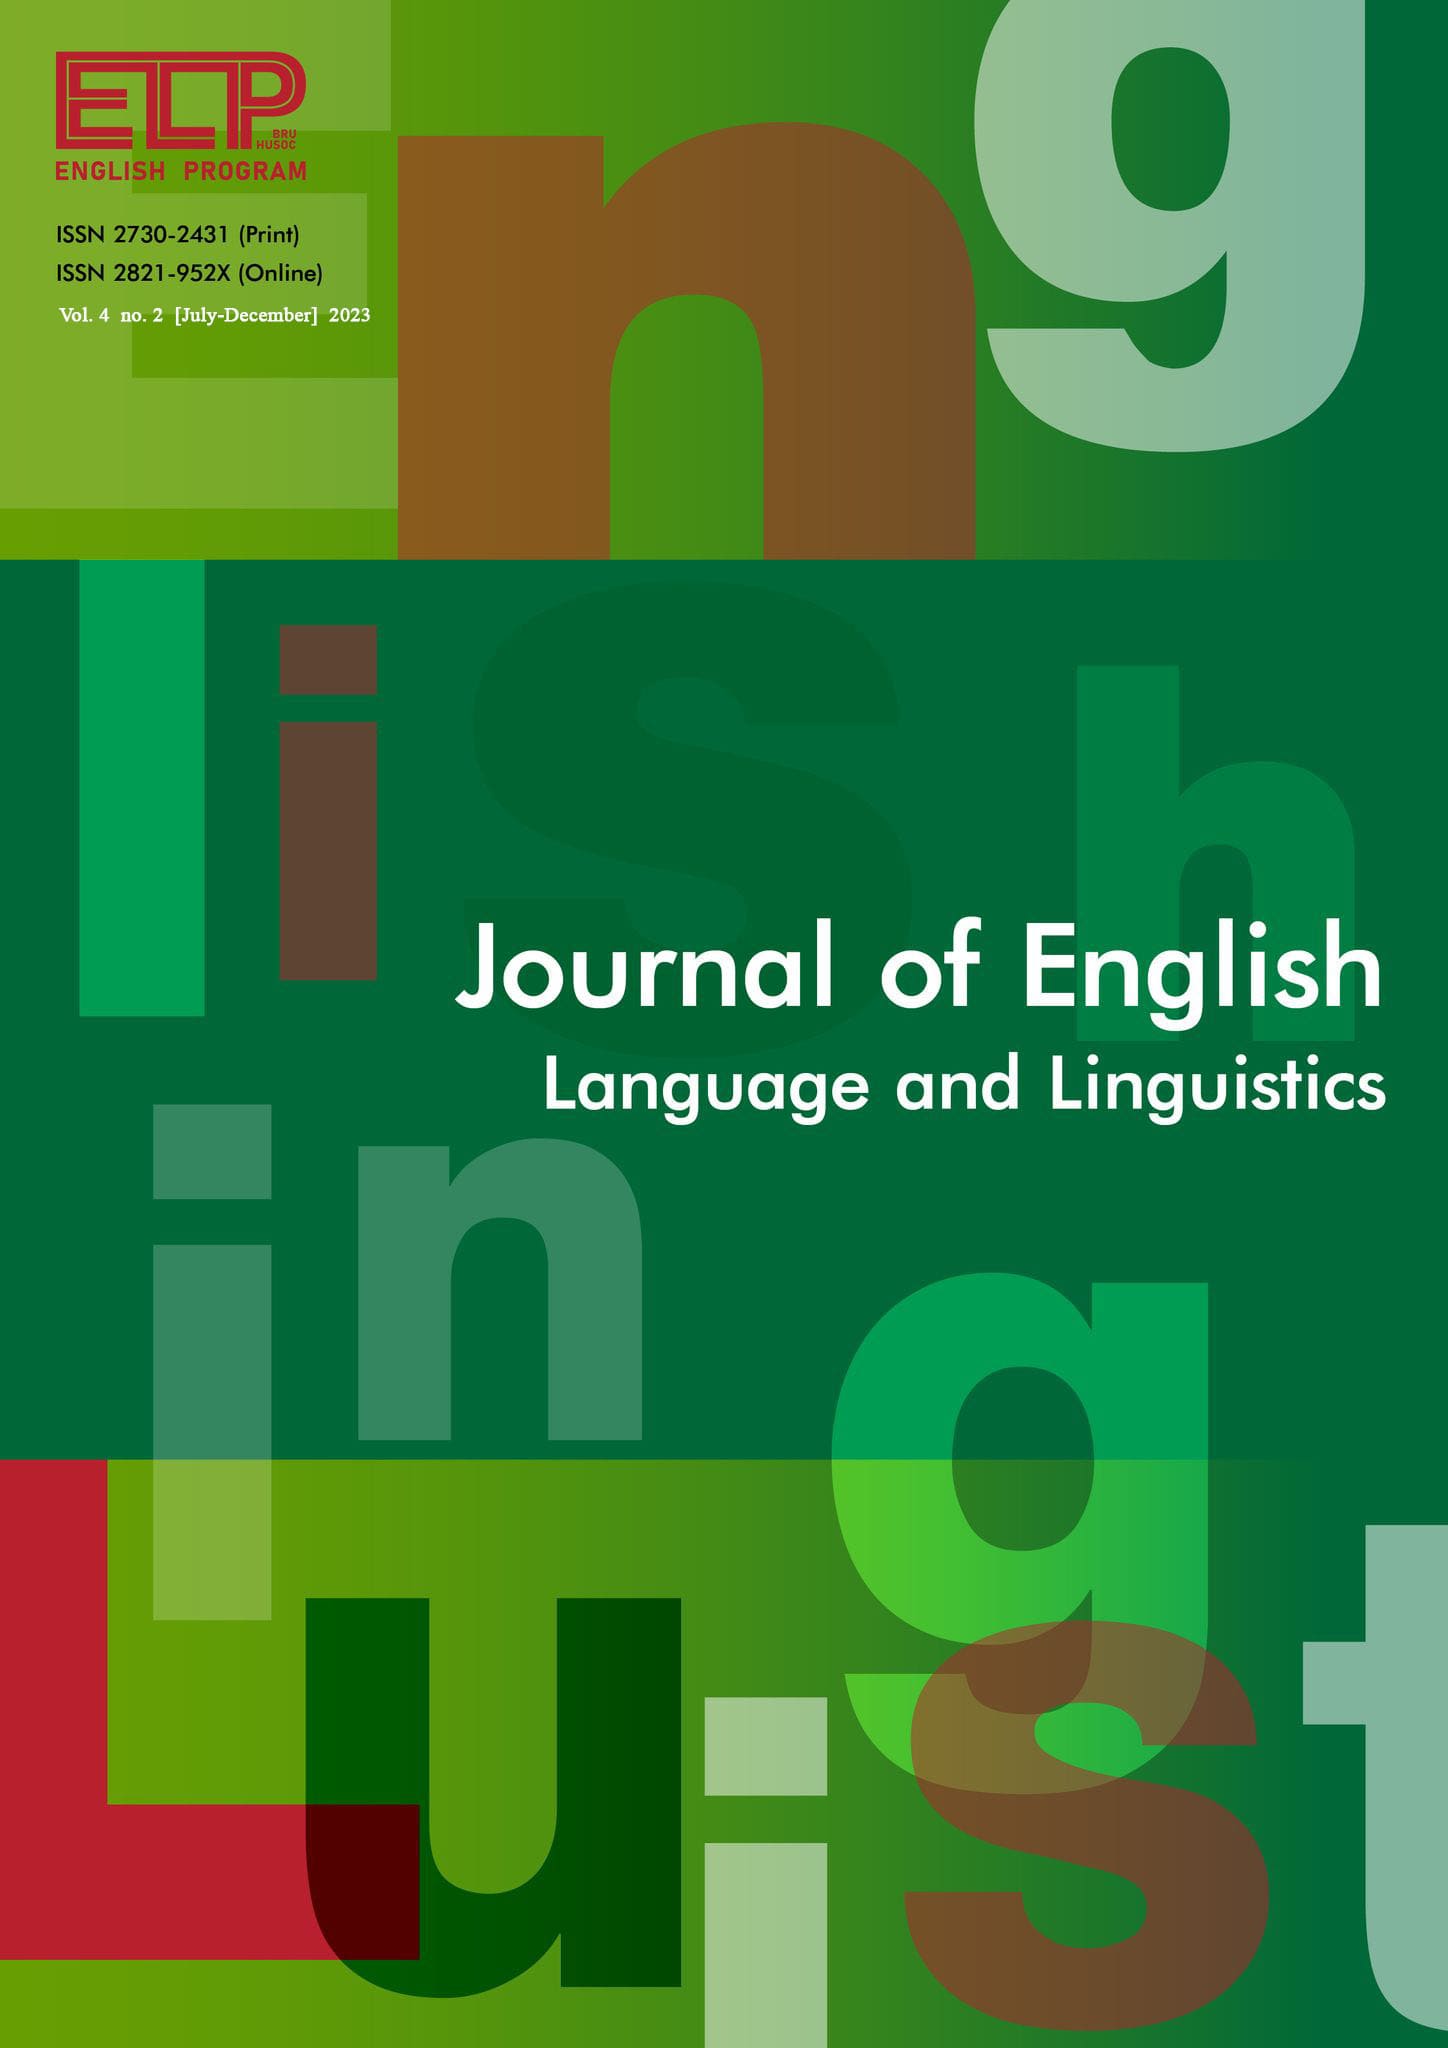 					View Vol. 4 No. 2 (2023): Journal of English Language and Linguistics (JEL)
				